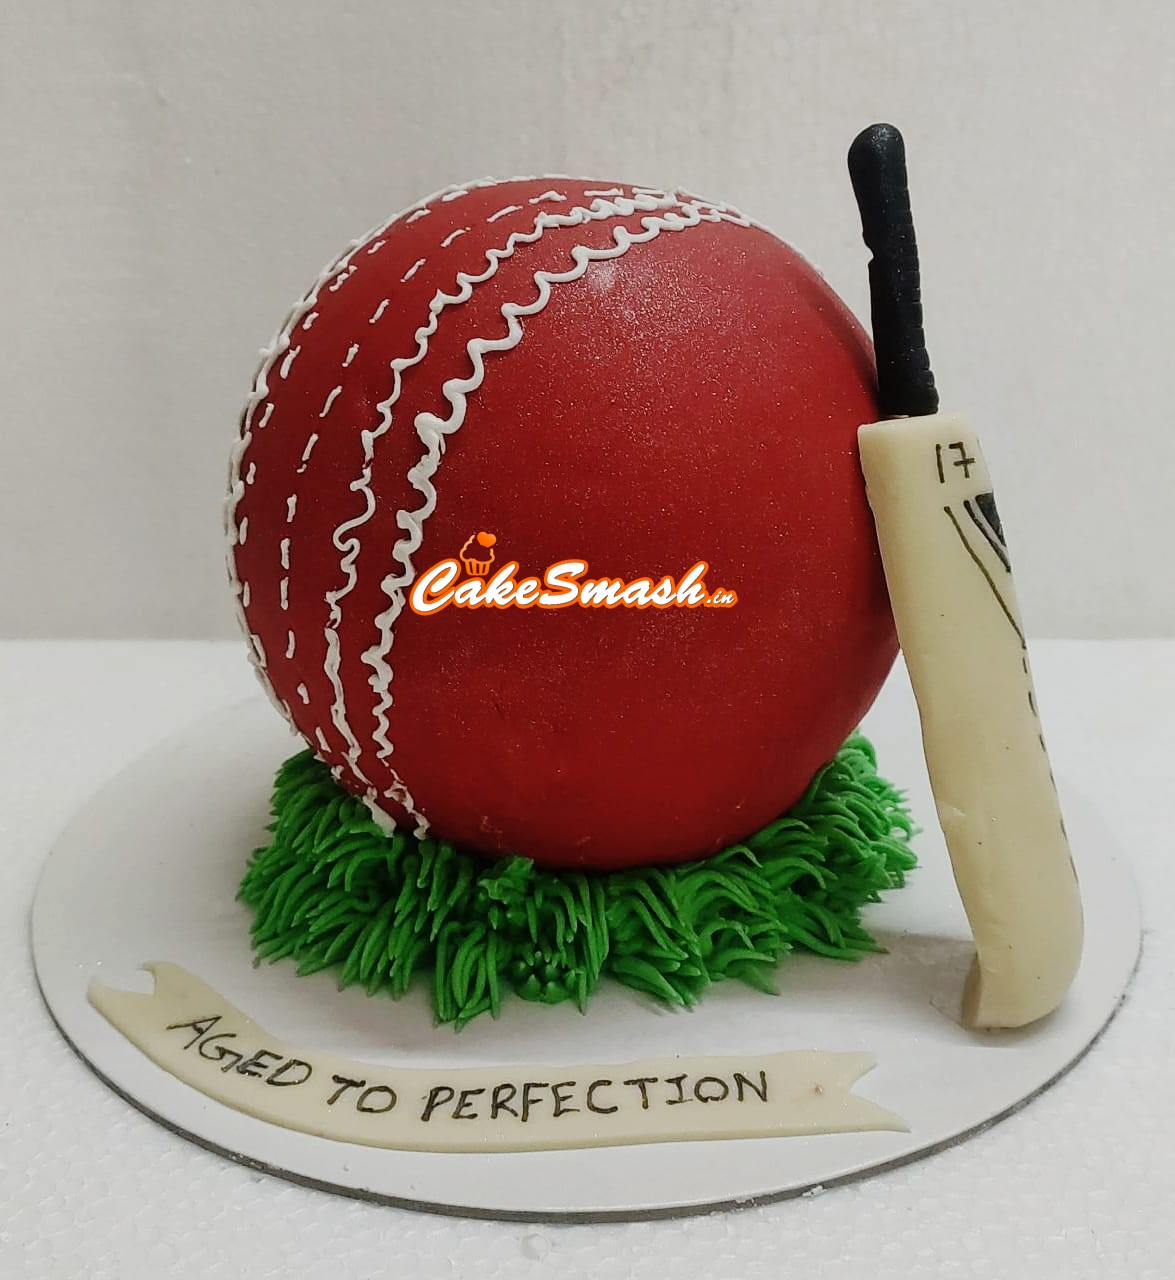 Cricket Birthday Cake | Fun and Delicious Cricket Theme Cake